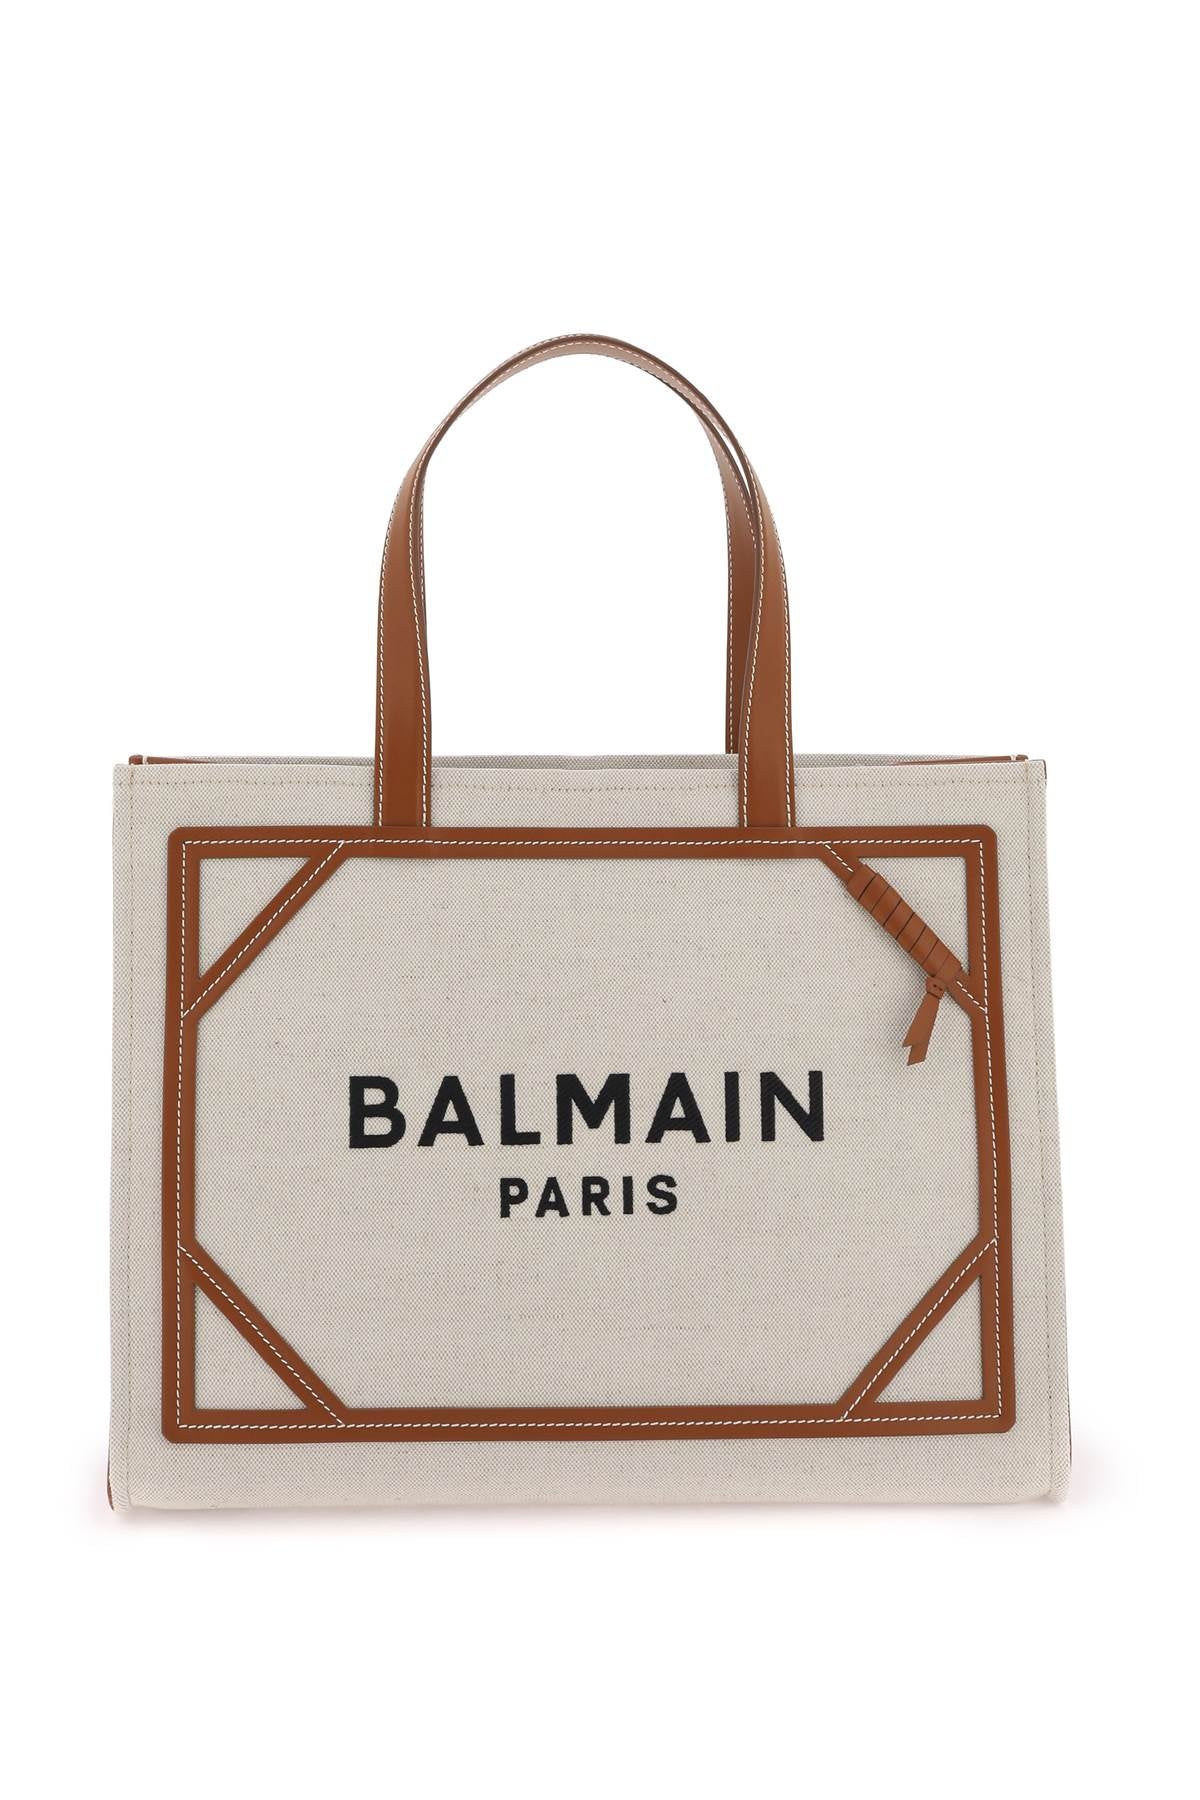 B-ARMY Tote Handbag BY BALMAIN for Women - SS24 Collection